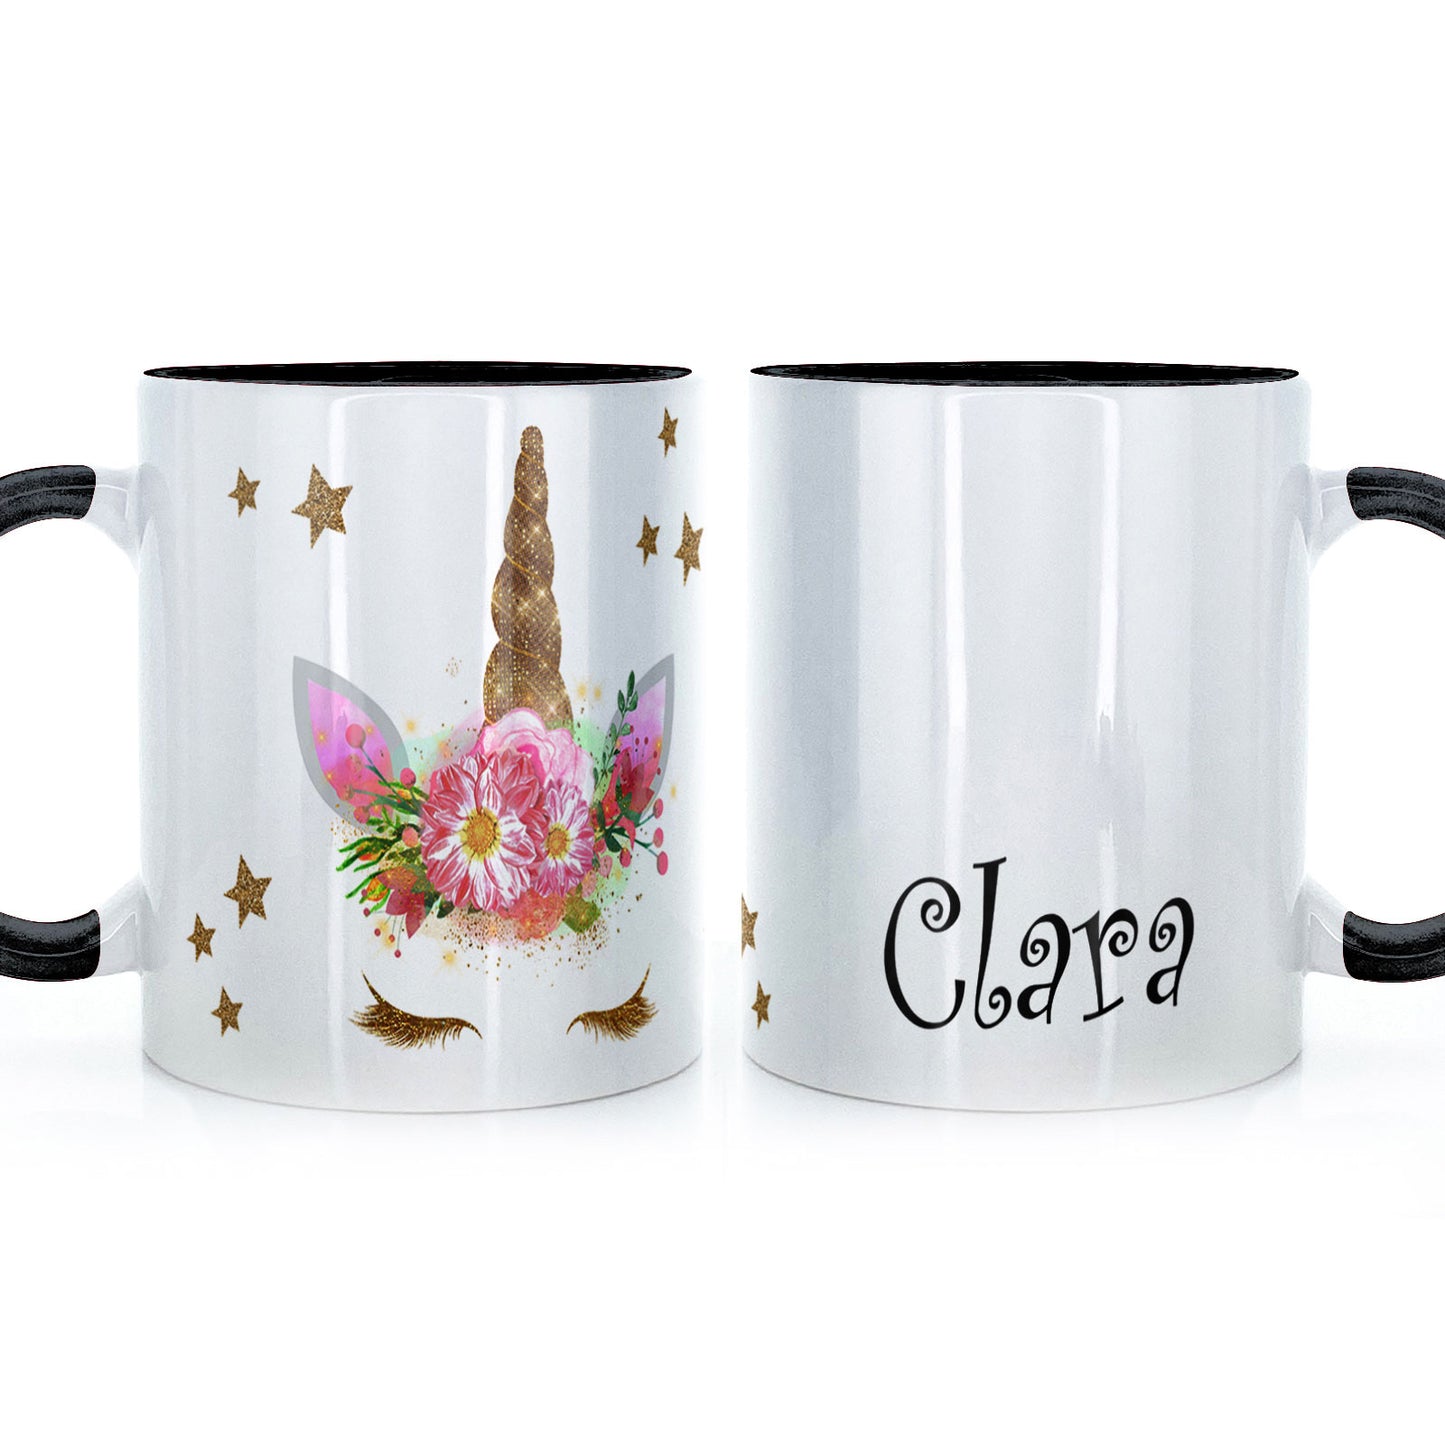 Personalised Mug with Mystical Text and Gold Eyelashes Gold Floral Unicorn